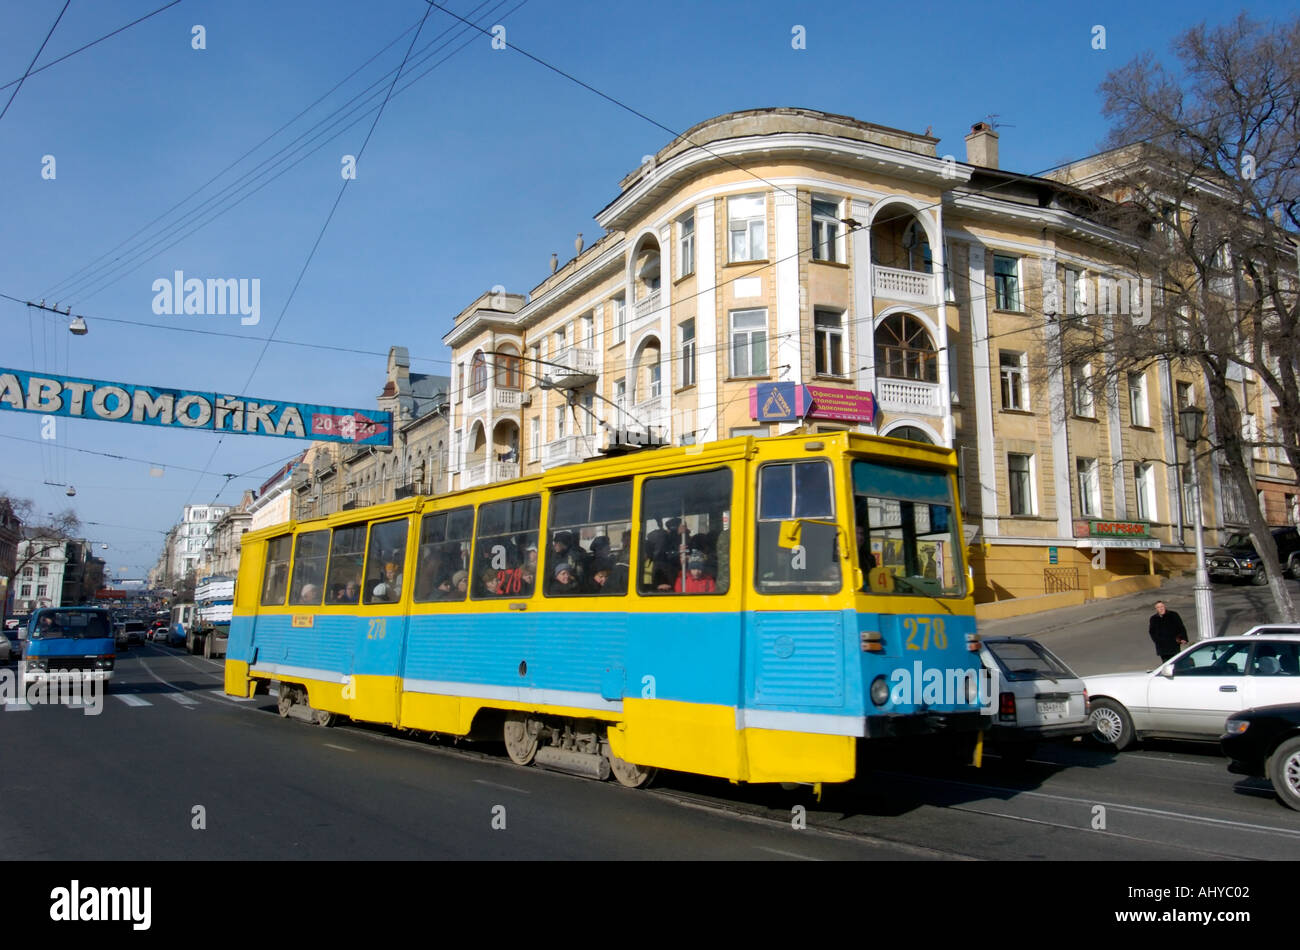 Tram on street in Vladivostok Russia Stock Photo